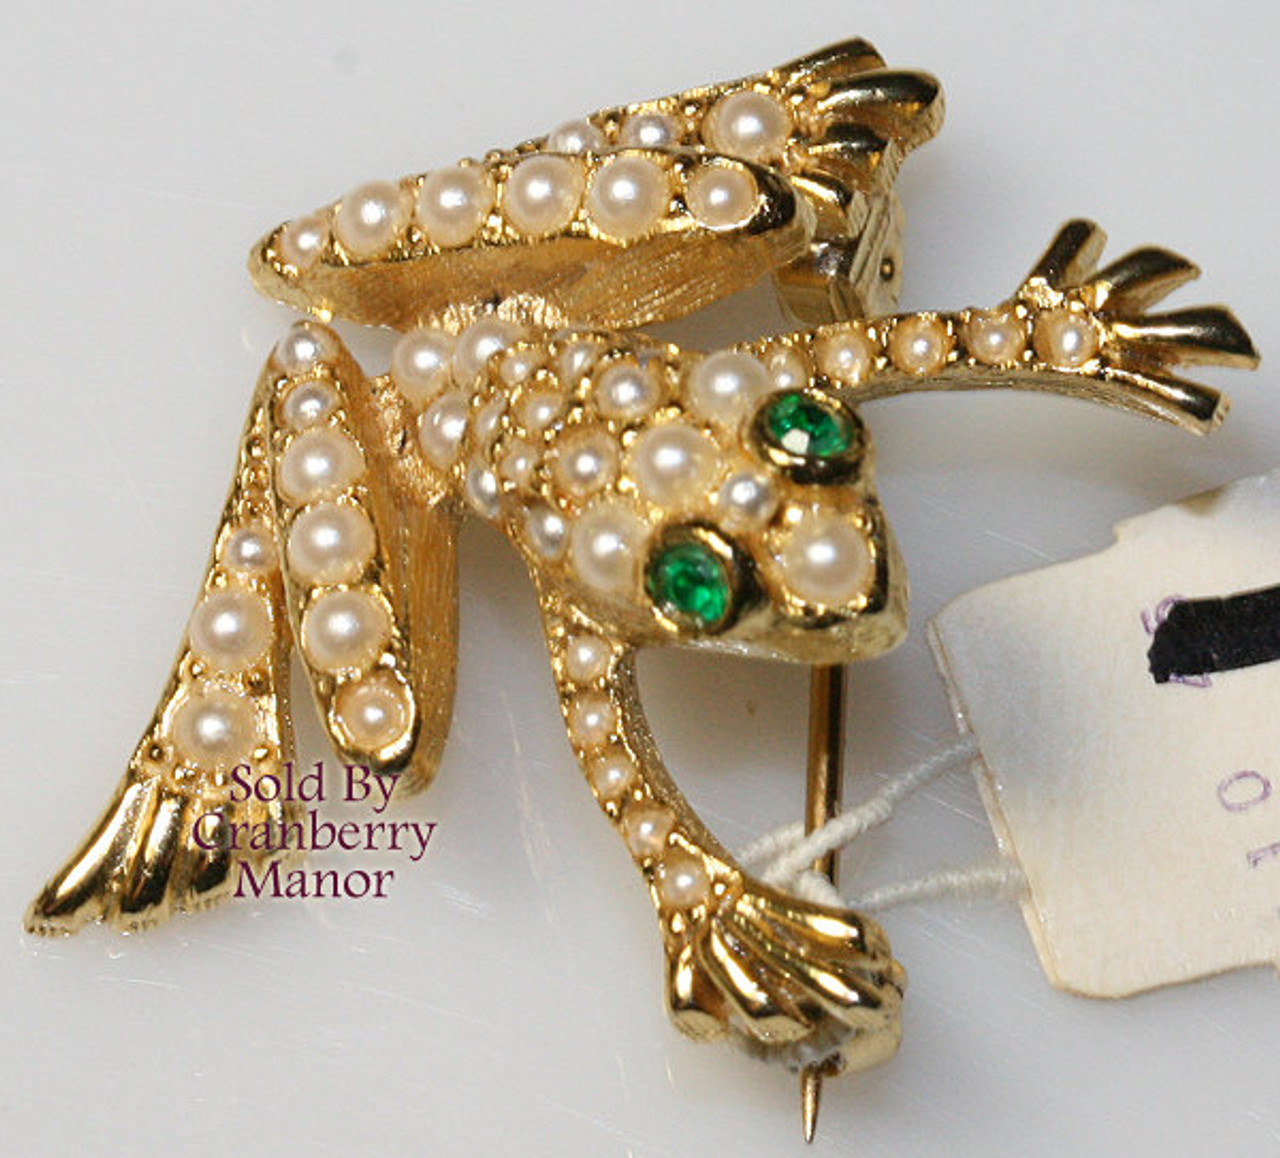 Neiman Marcus, Jewelry